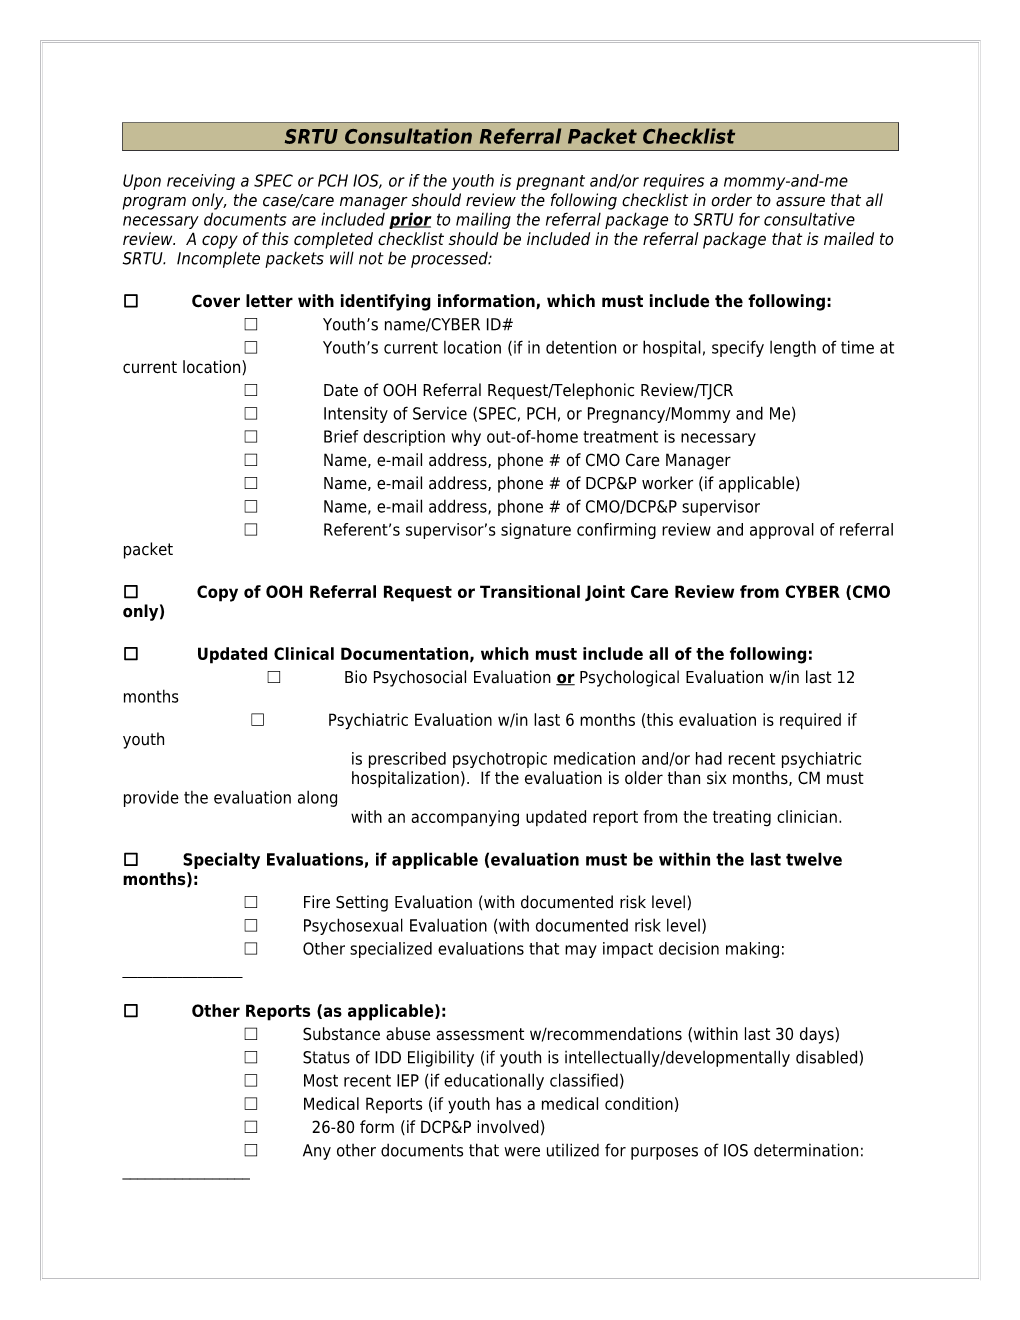 SRTU Consultation Referral Packet Checklist